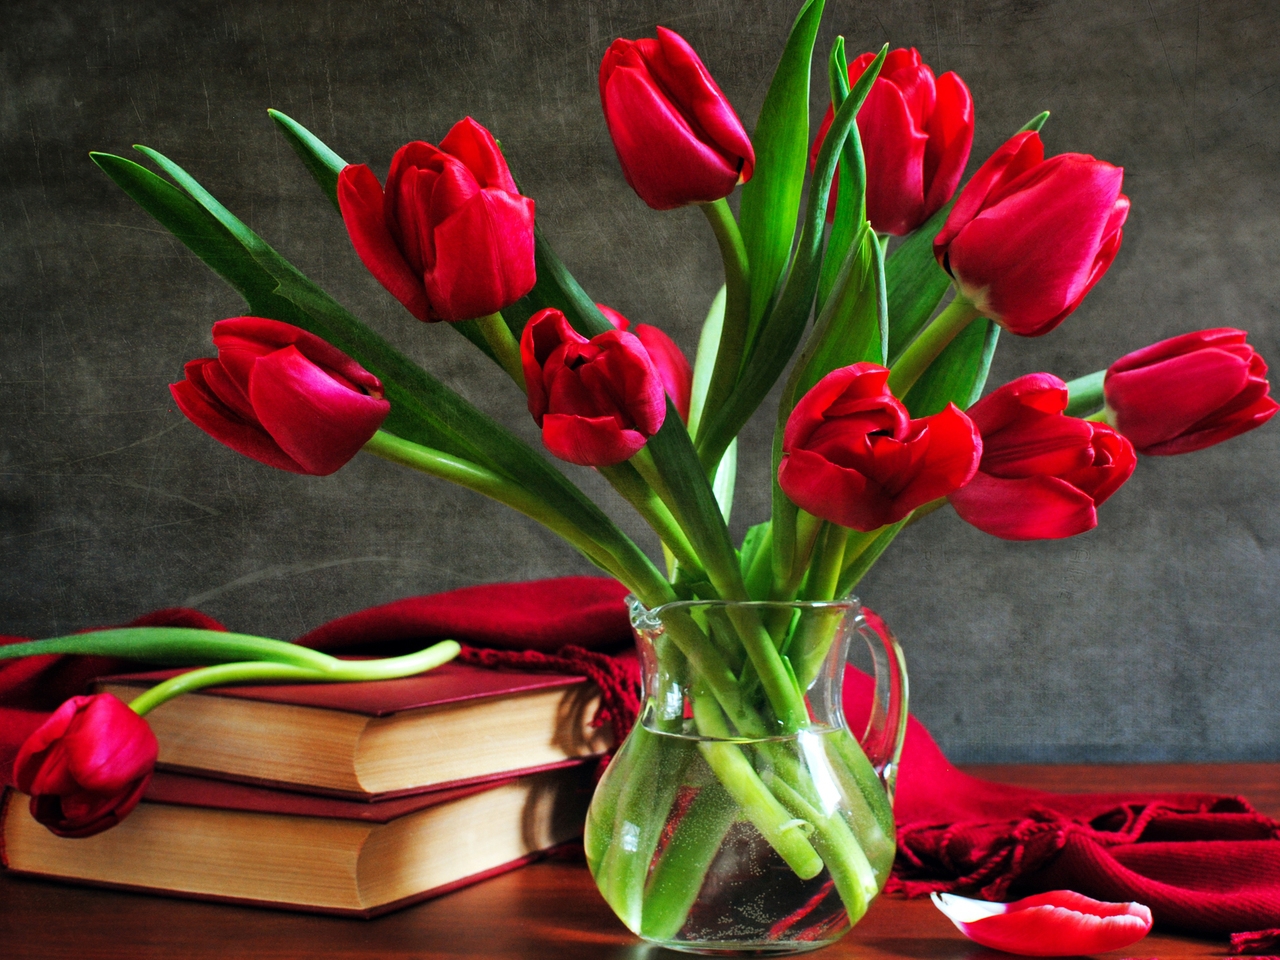 bouquets, flowers, plants, tulips